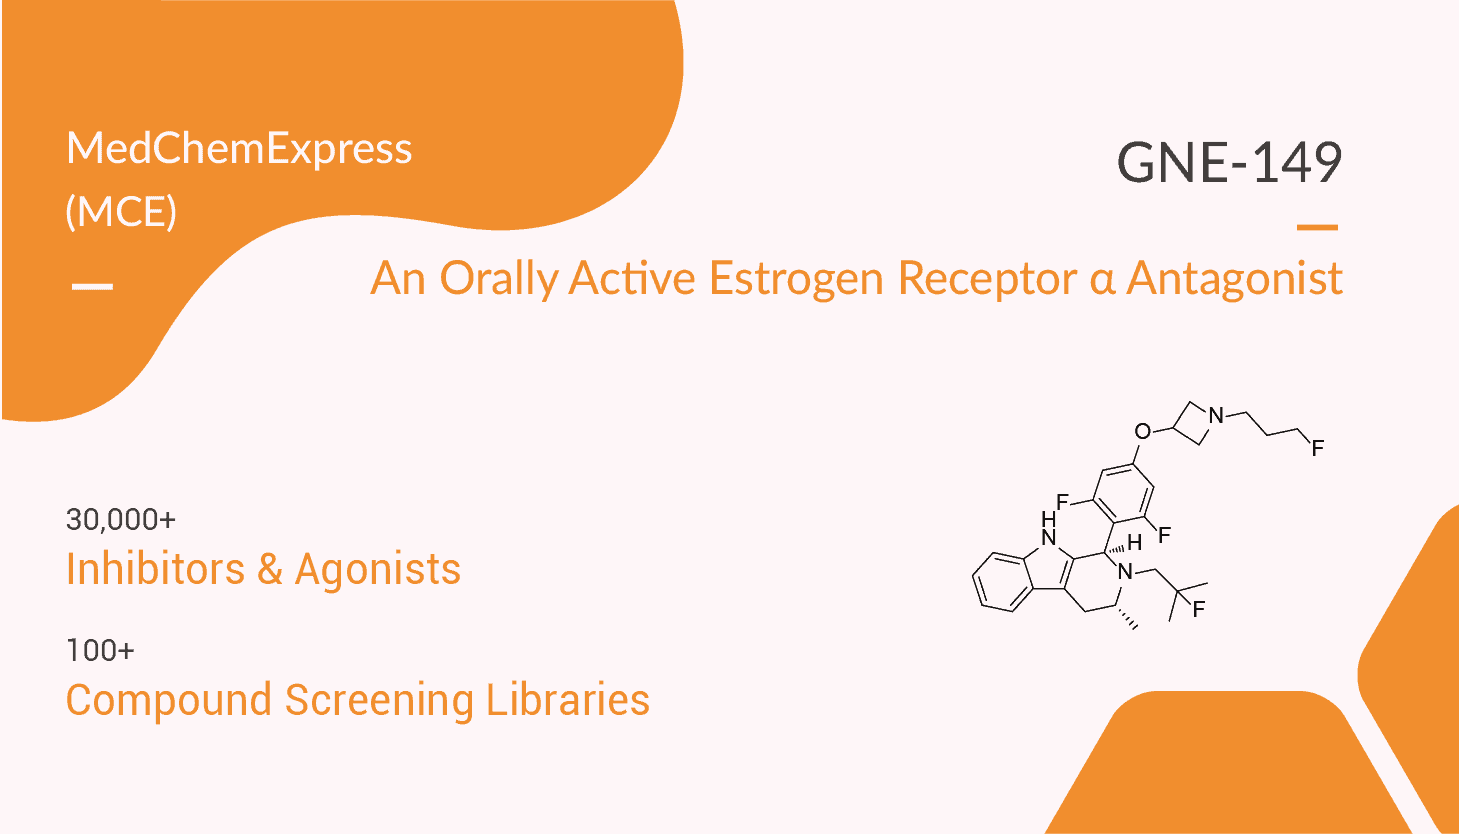 GNE 149 02 - GNE-149 is an Orally Active Estrogen Receptor α Antagonist